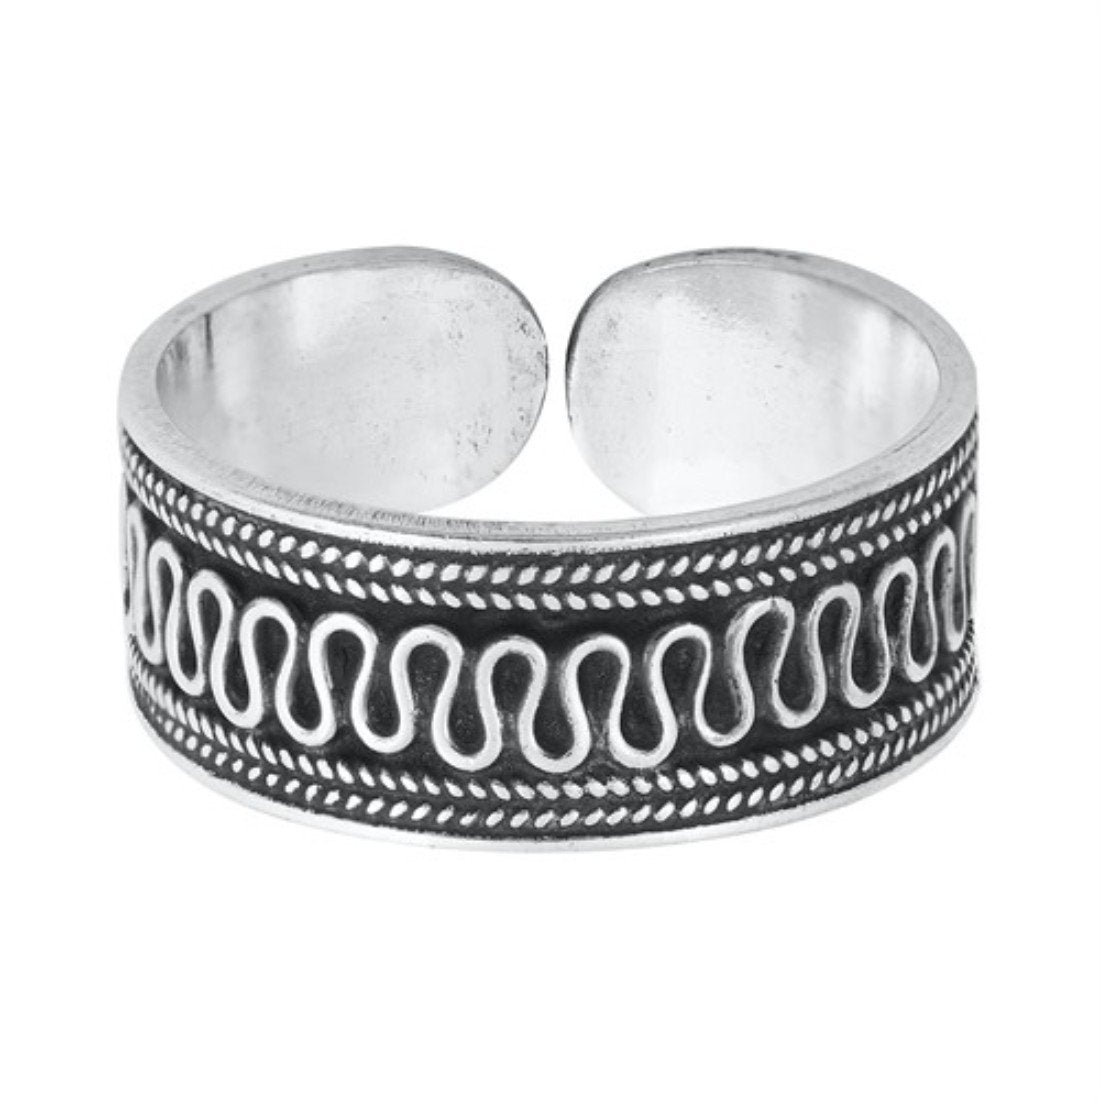 Silver Toe Ring Bali Design Adjustable Band 925 Sterling Silver (6mm)